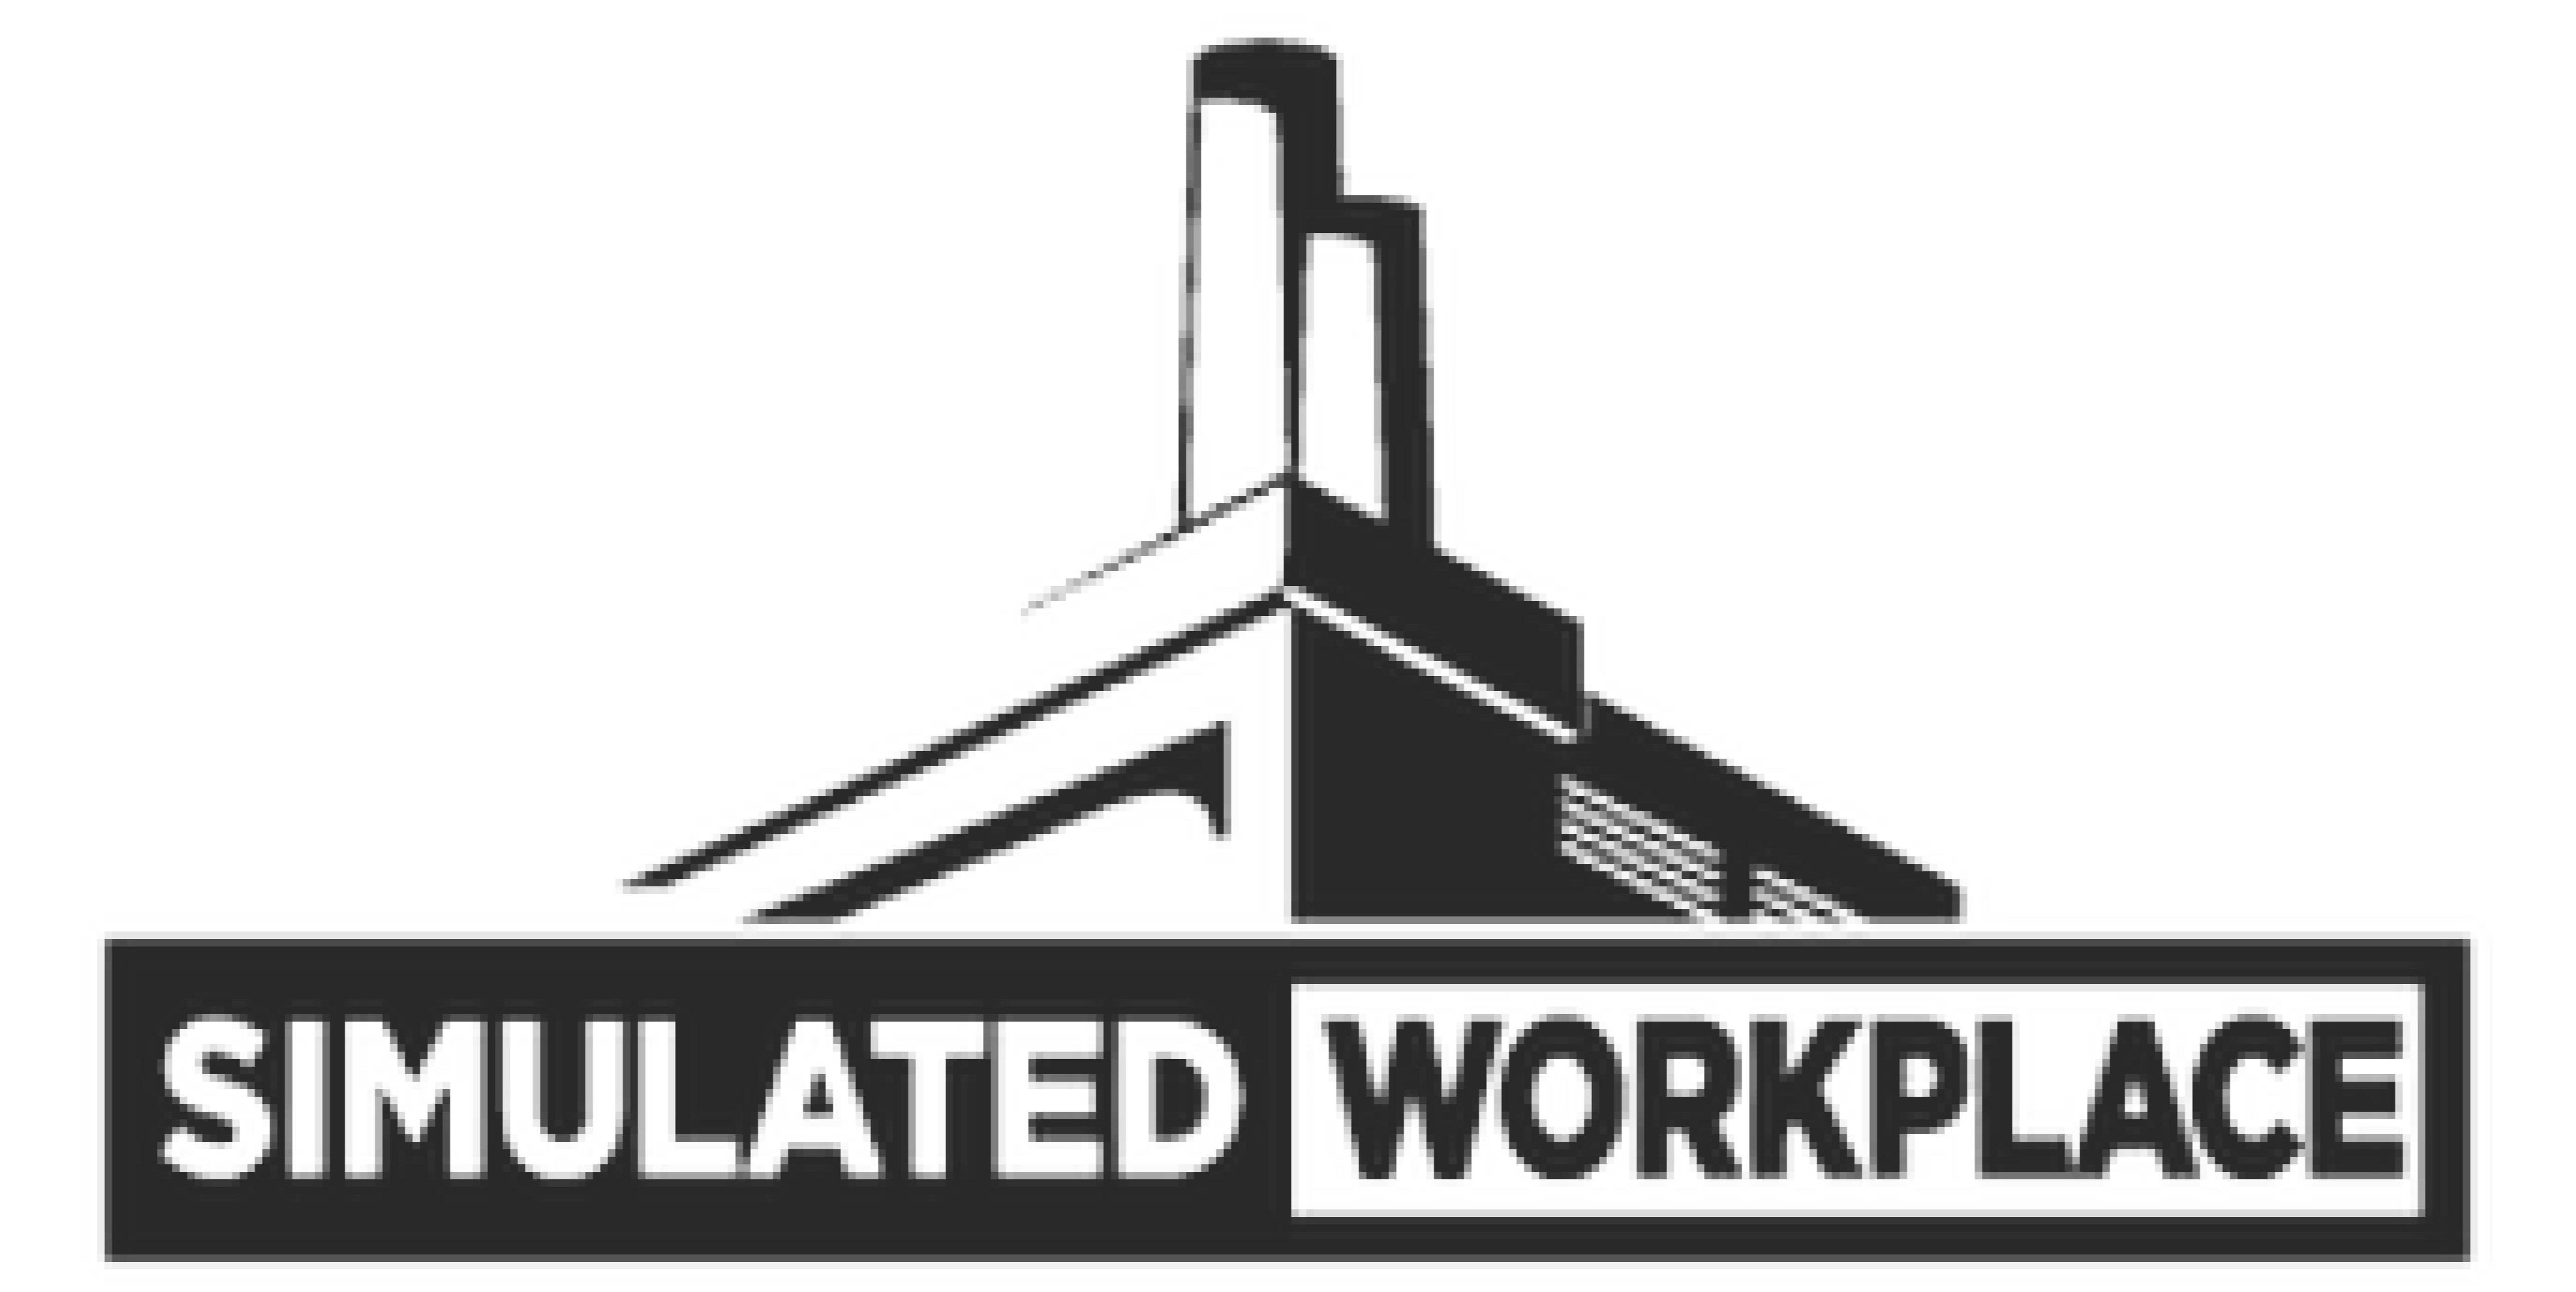 Simulated Workplace Logo